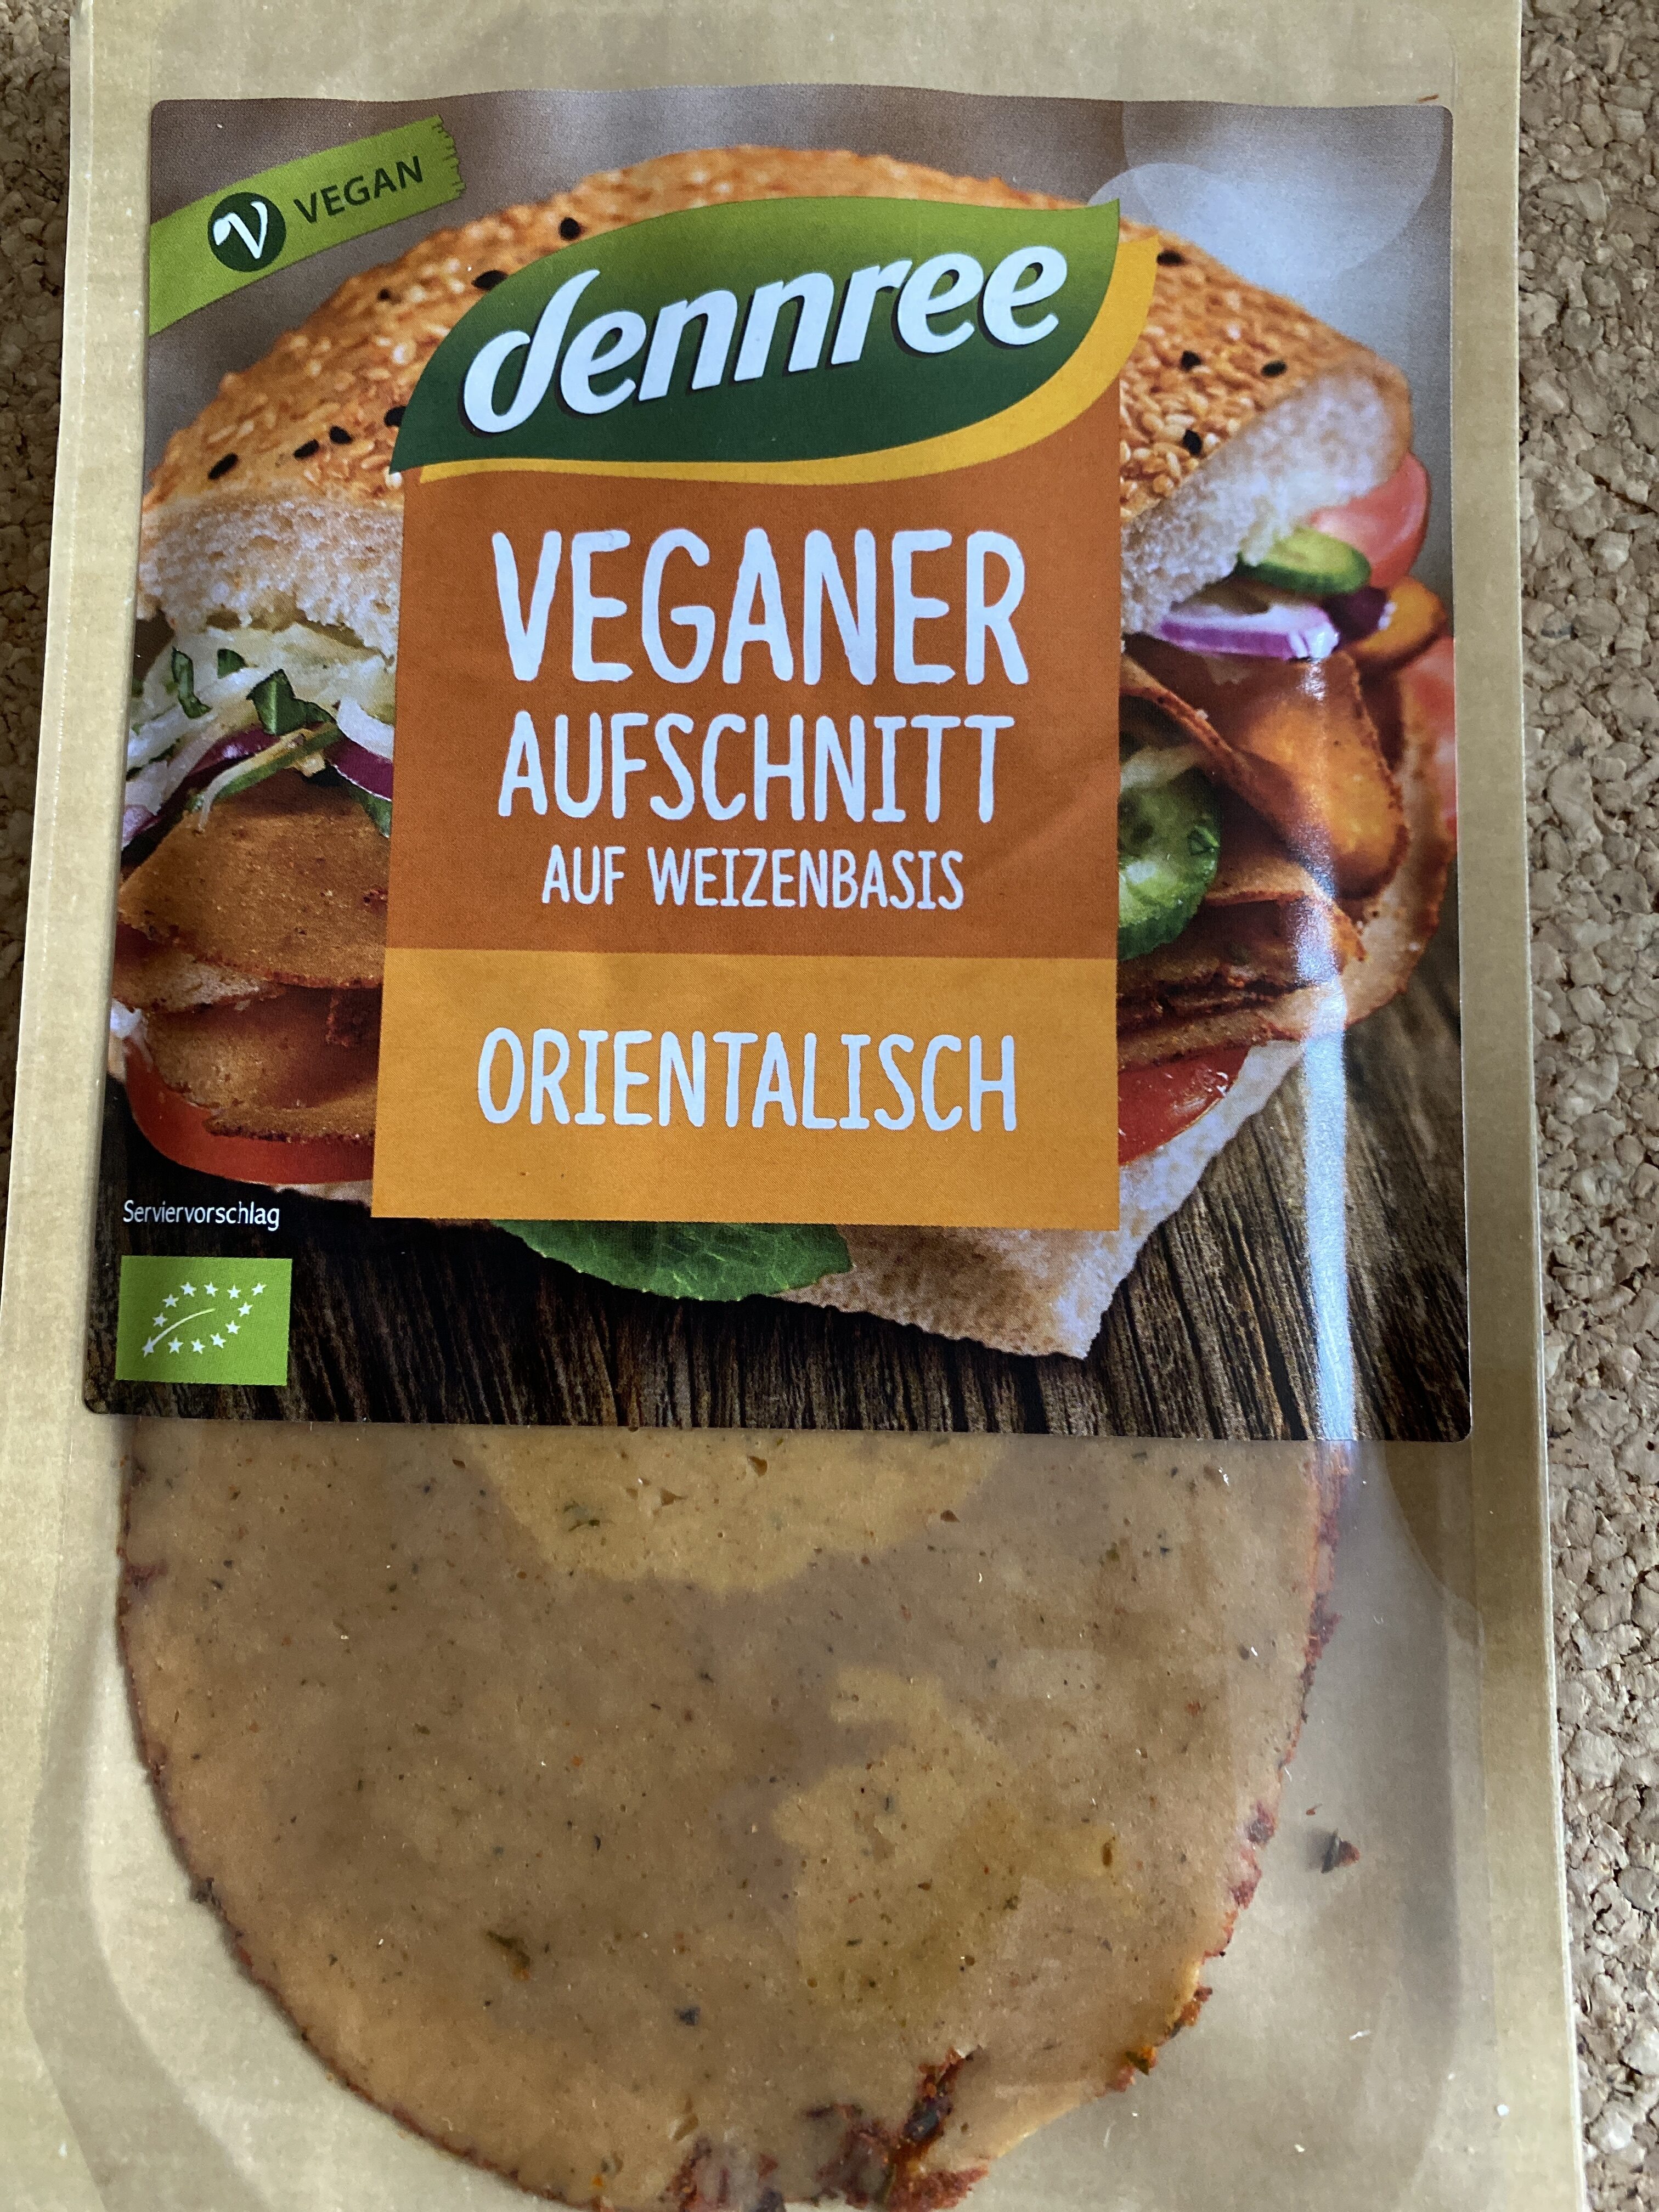 Veganer Aufschnitt Orientalisch - Product - de